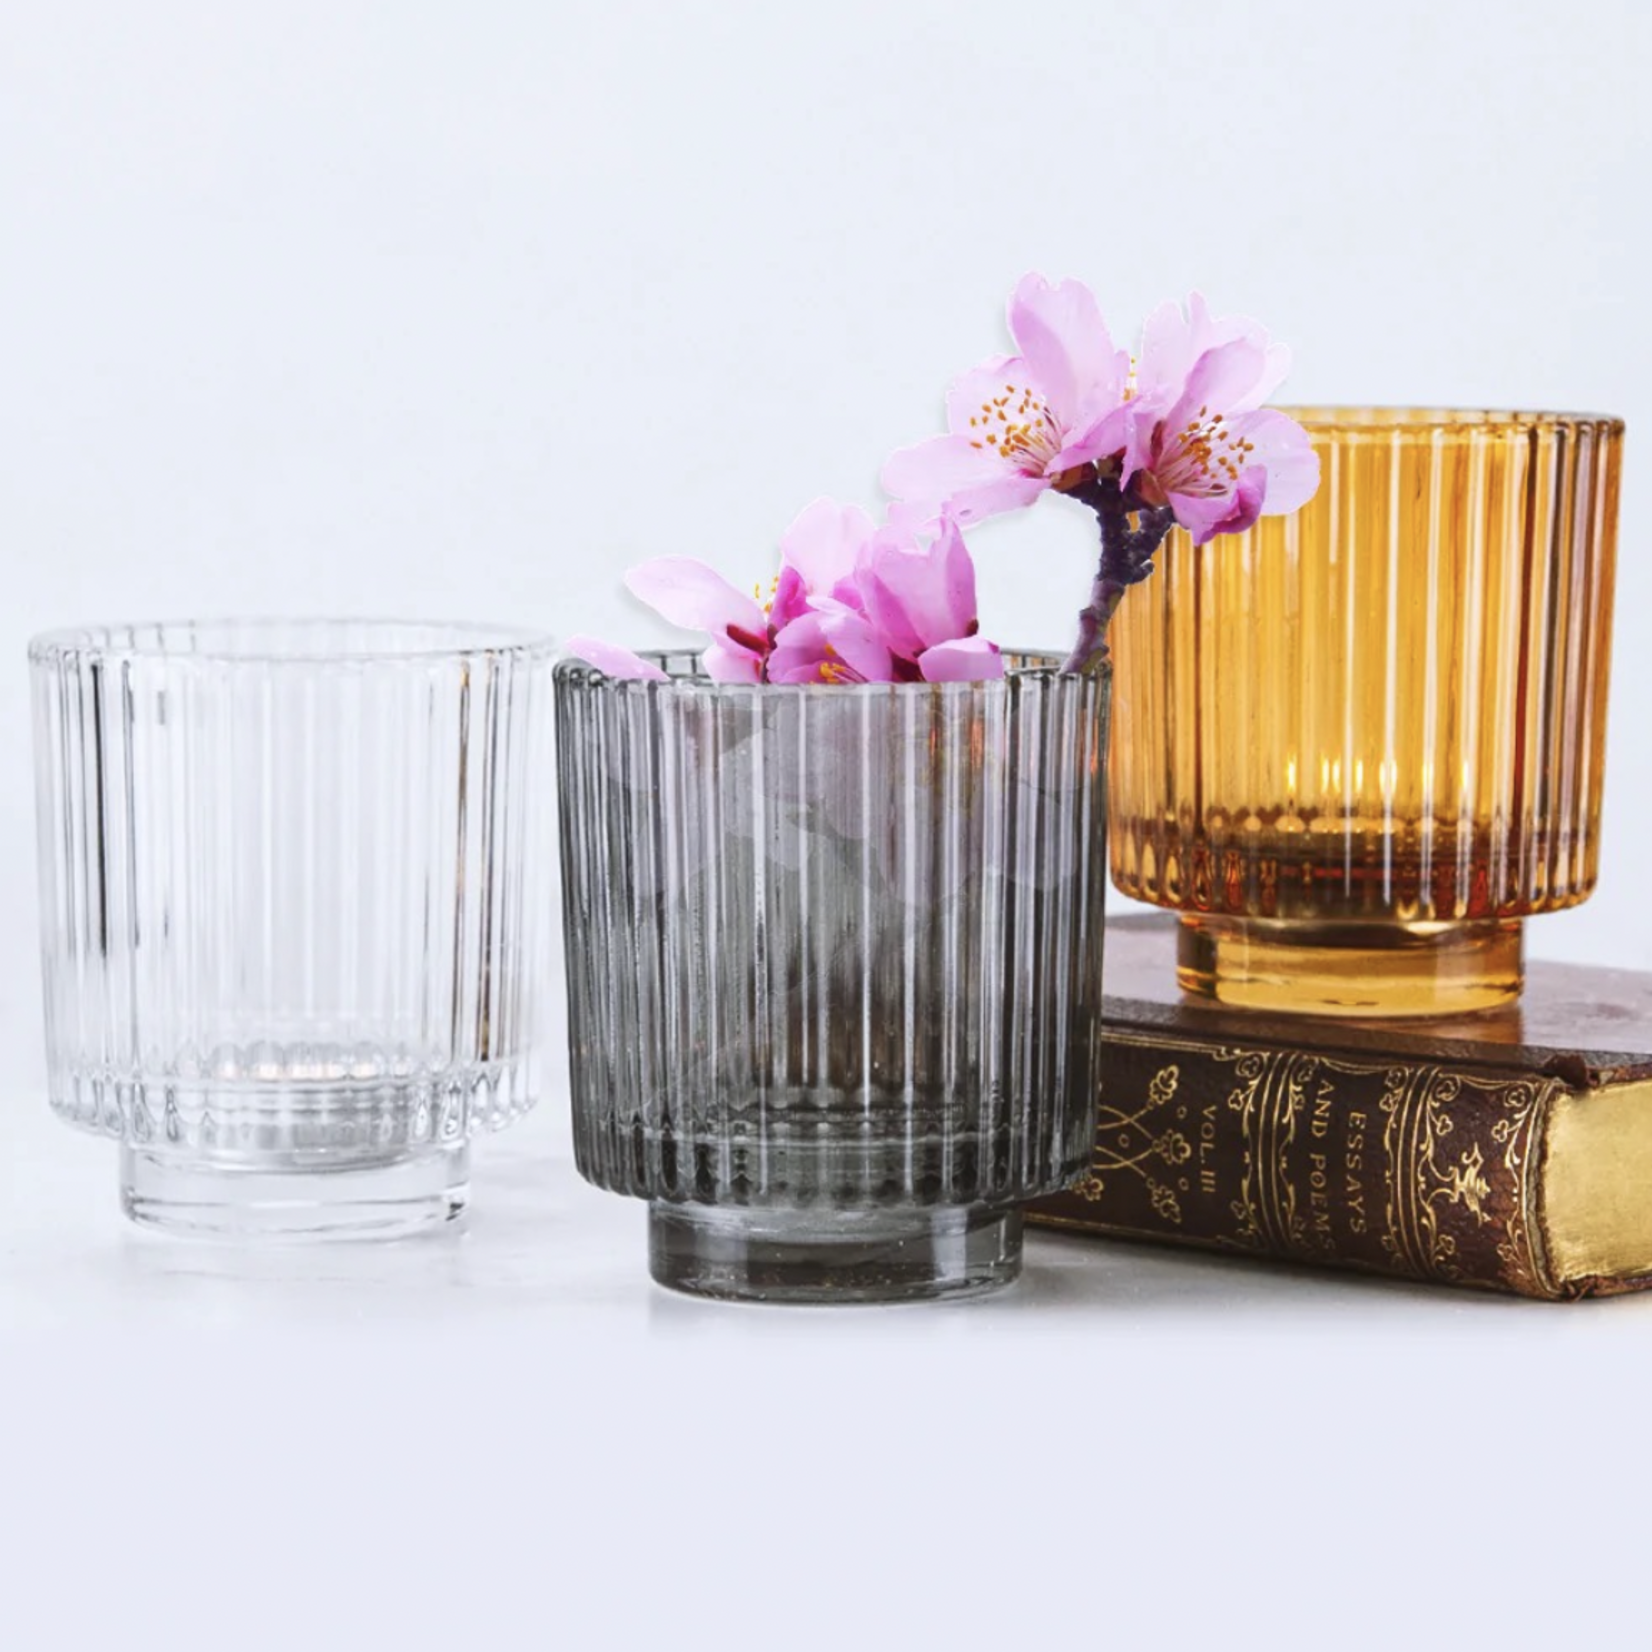 4”H X 3.75” AMBER GLASS TEALIGHT VOTIVE CANDLE HOLDER